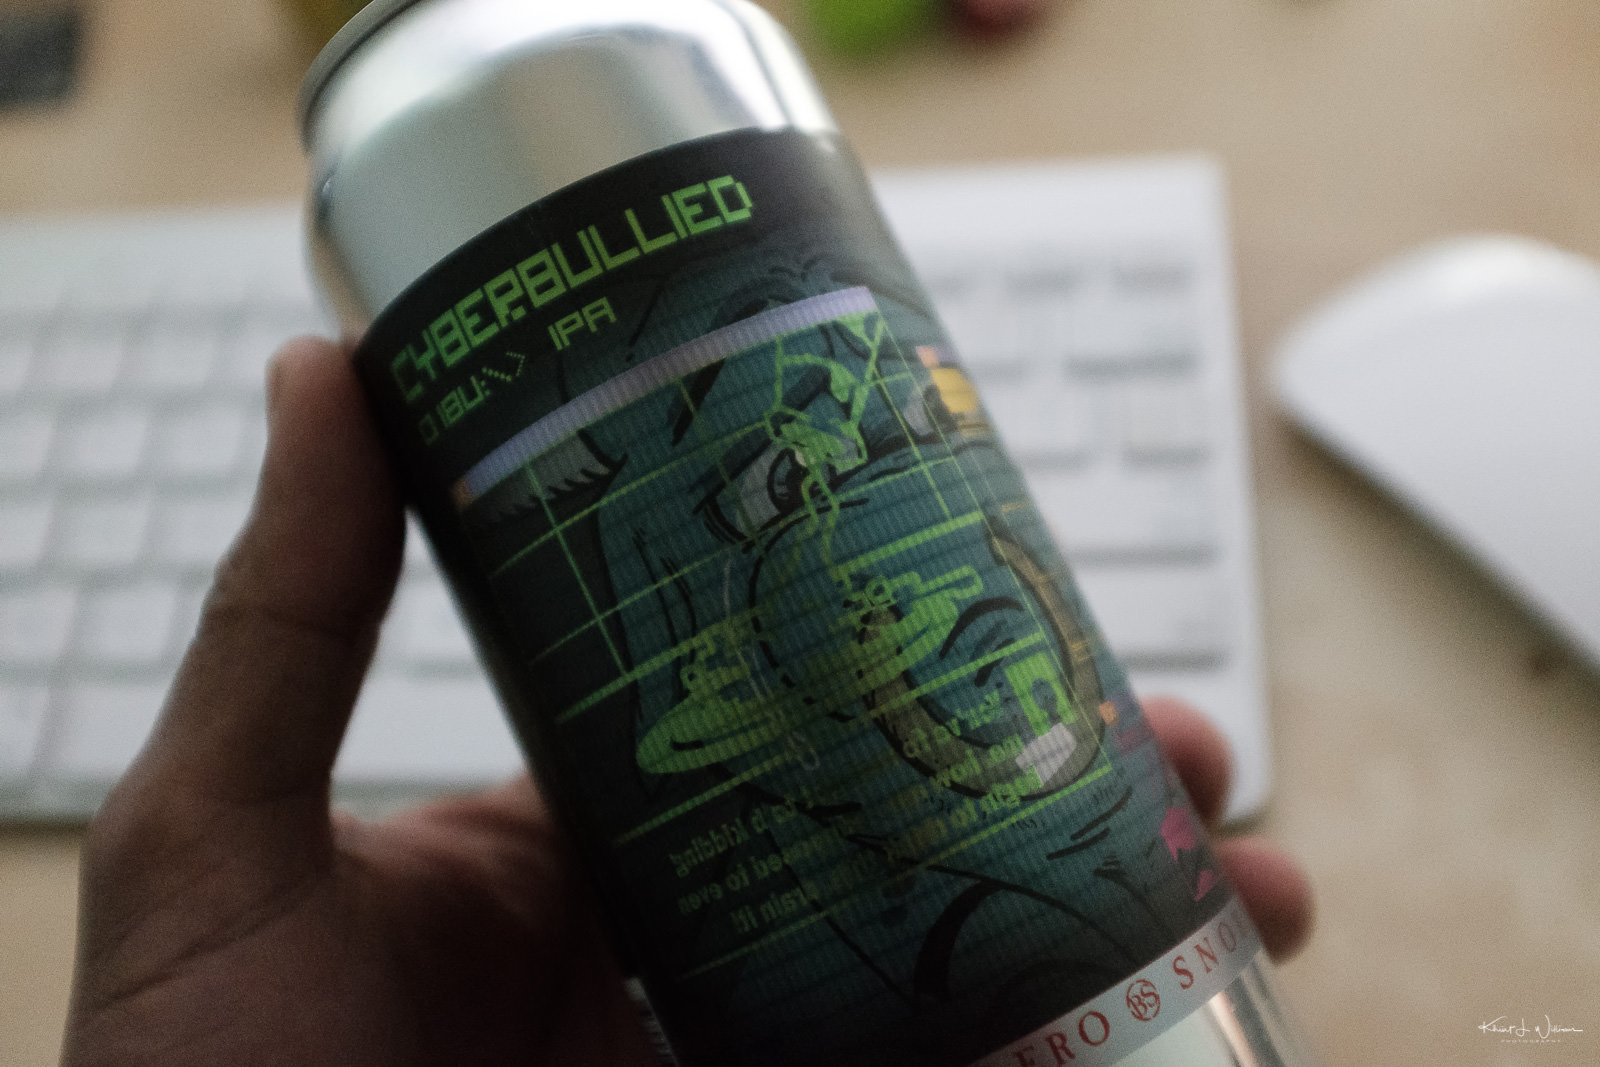 Bolero Snort Brewery CyberBULLied IPA